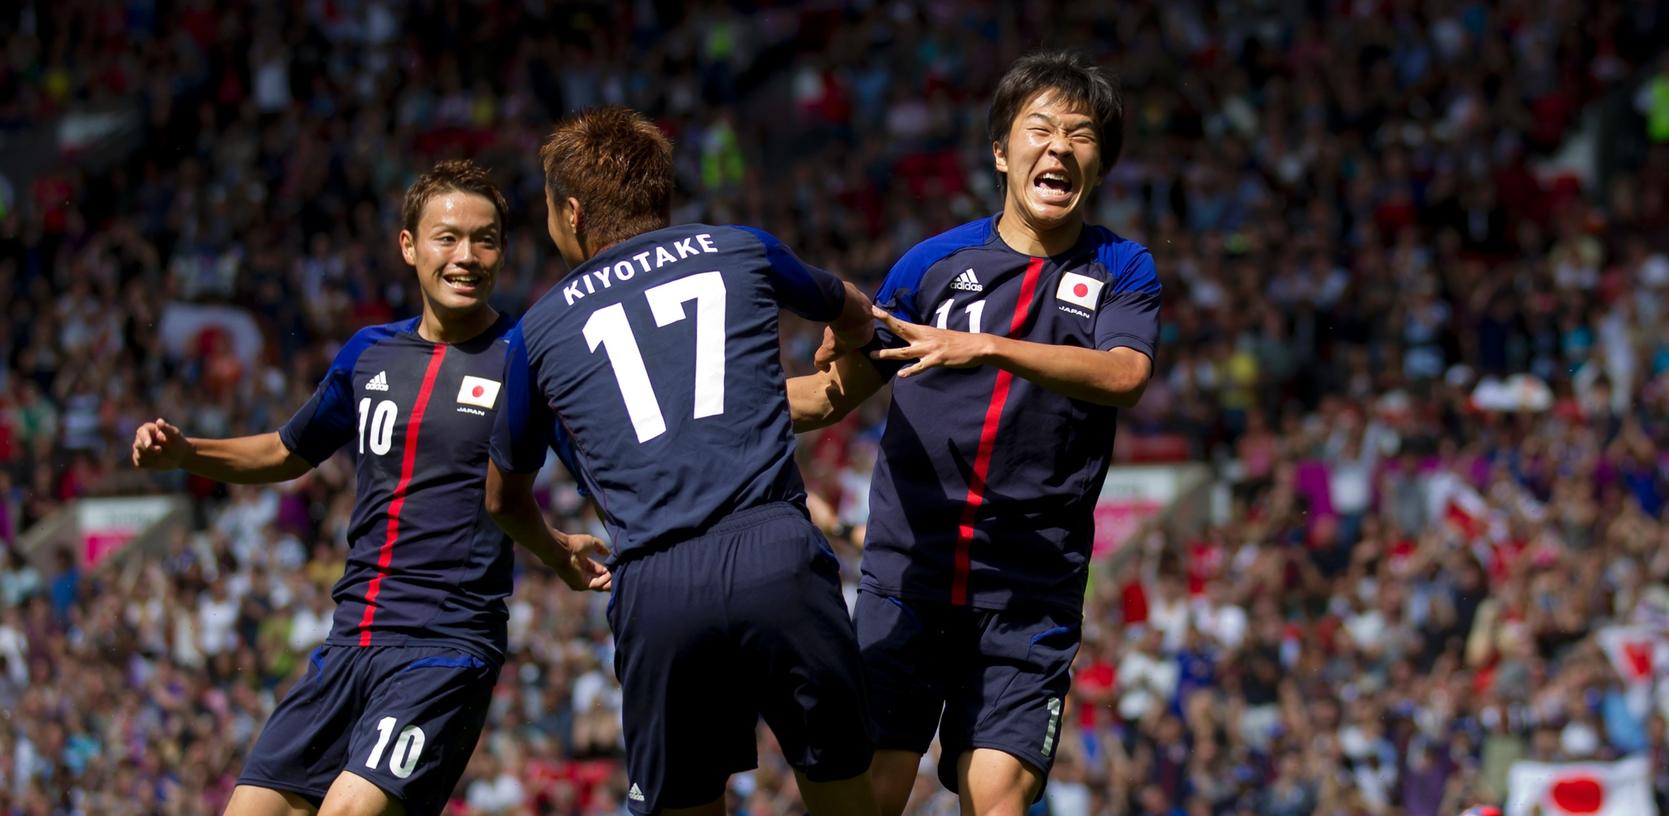 Kiyotake und Japan auf Olympia-Medaillenkurs